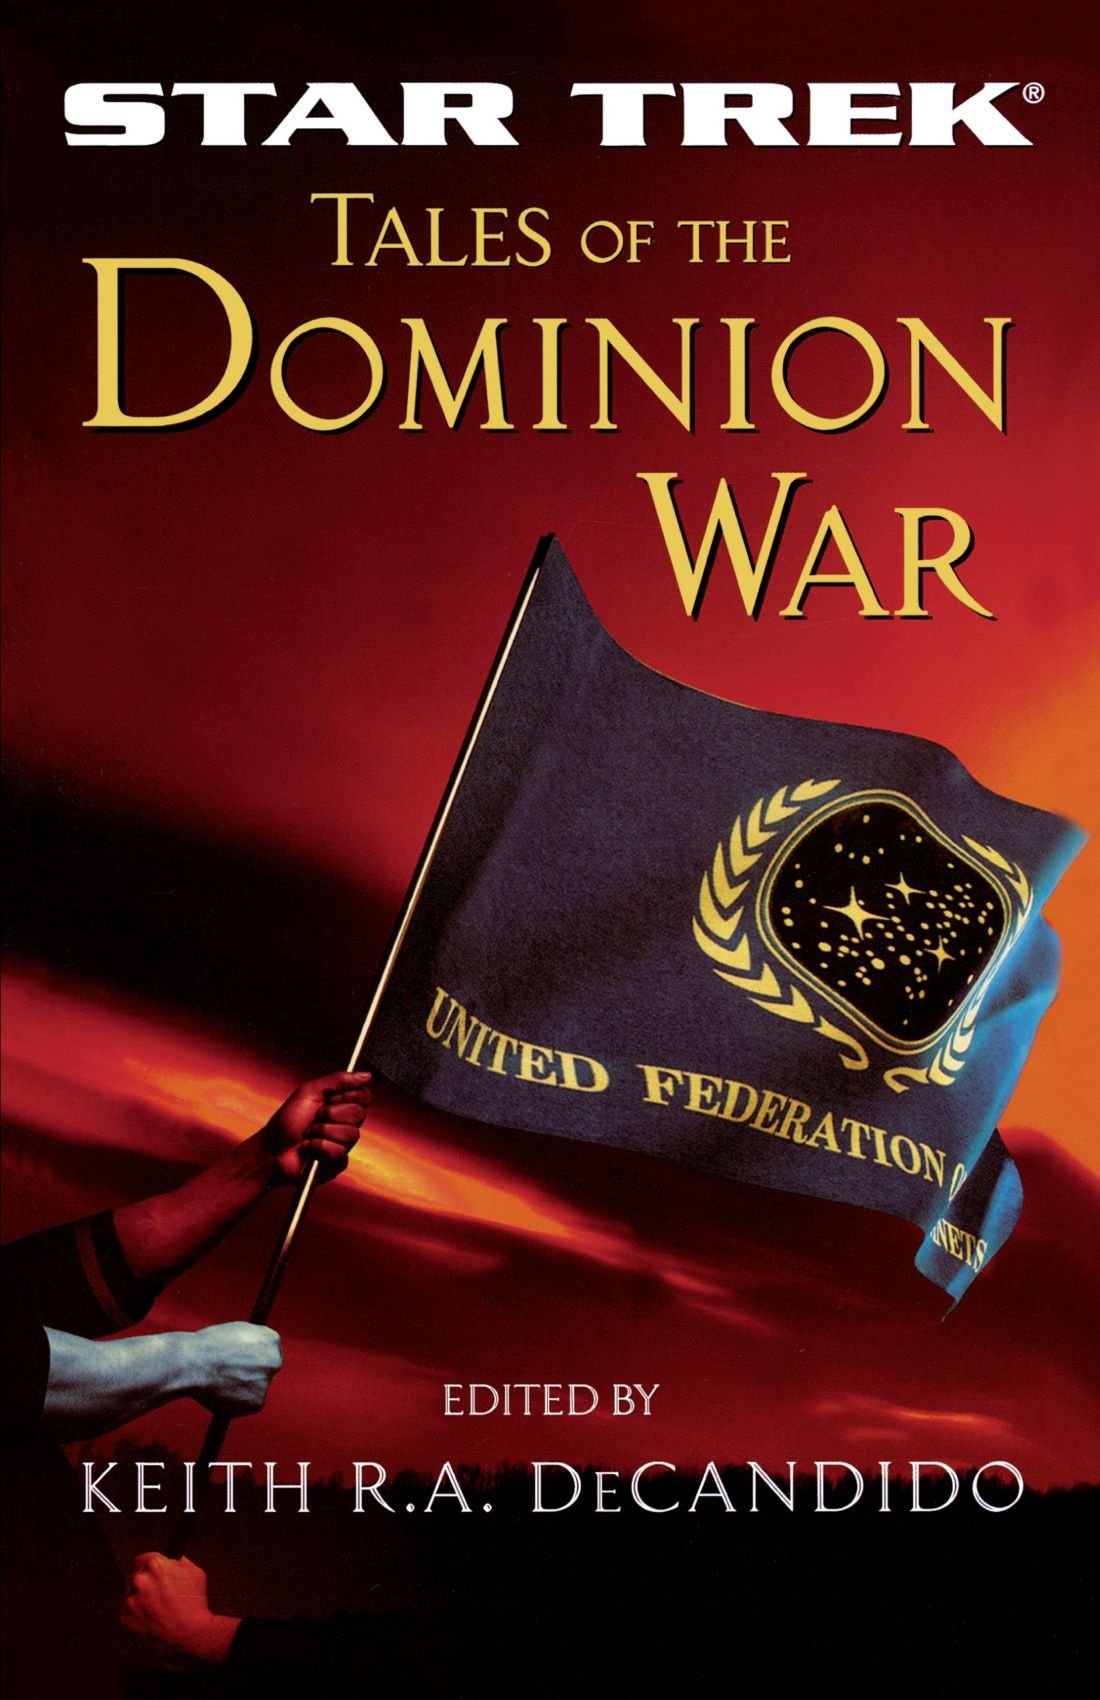 “Star Trek: Tales of the Dominion War” Review by Jimsscifi.blogspot.com